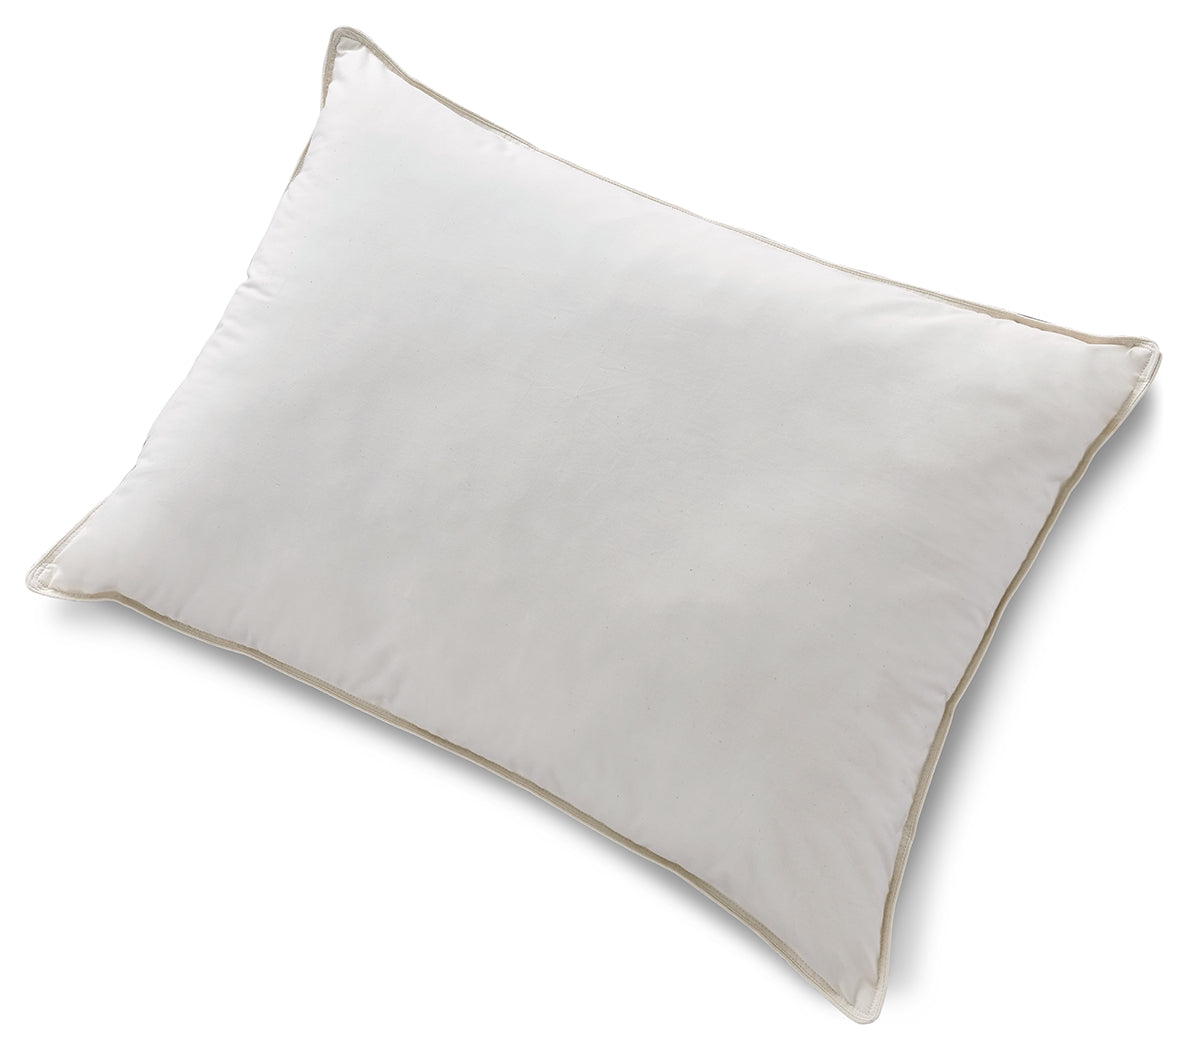 Z123 Pillow Series Cotton Allergy Pillow